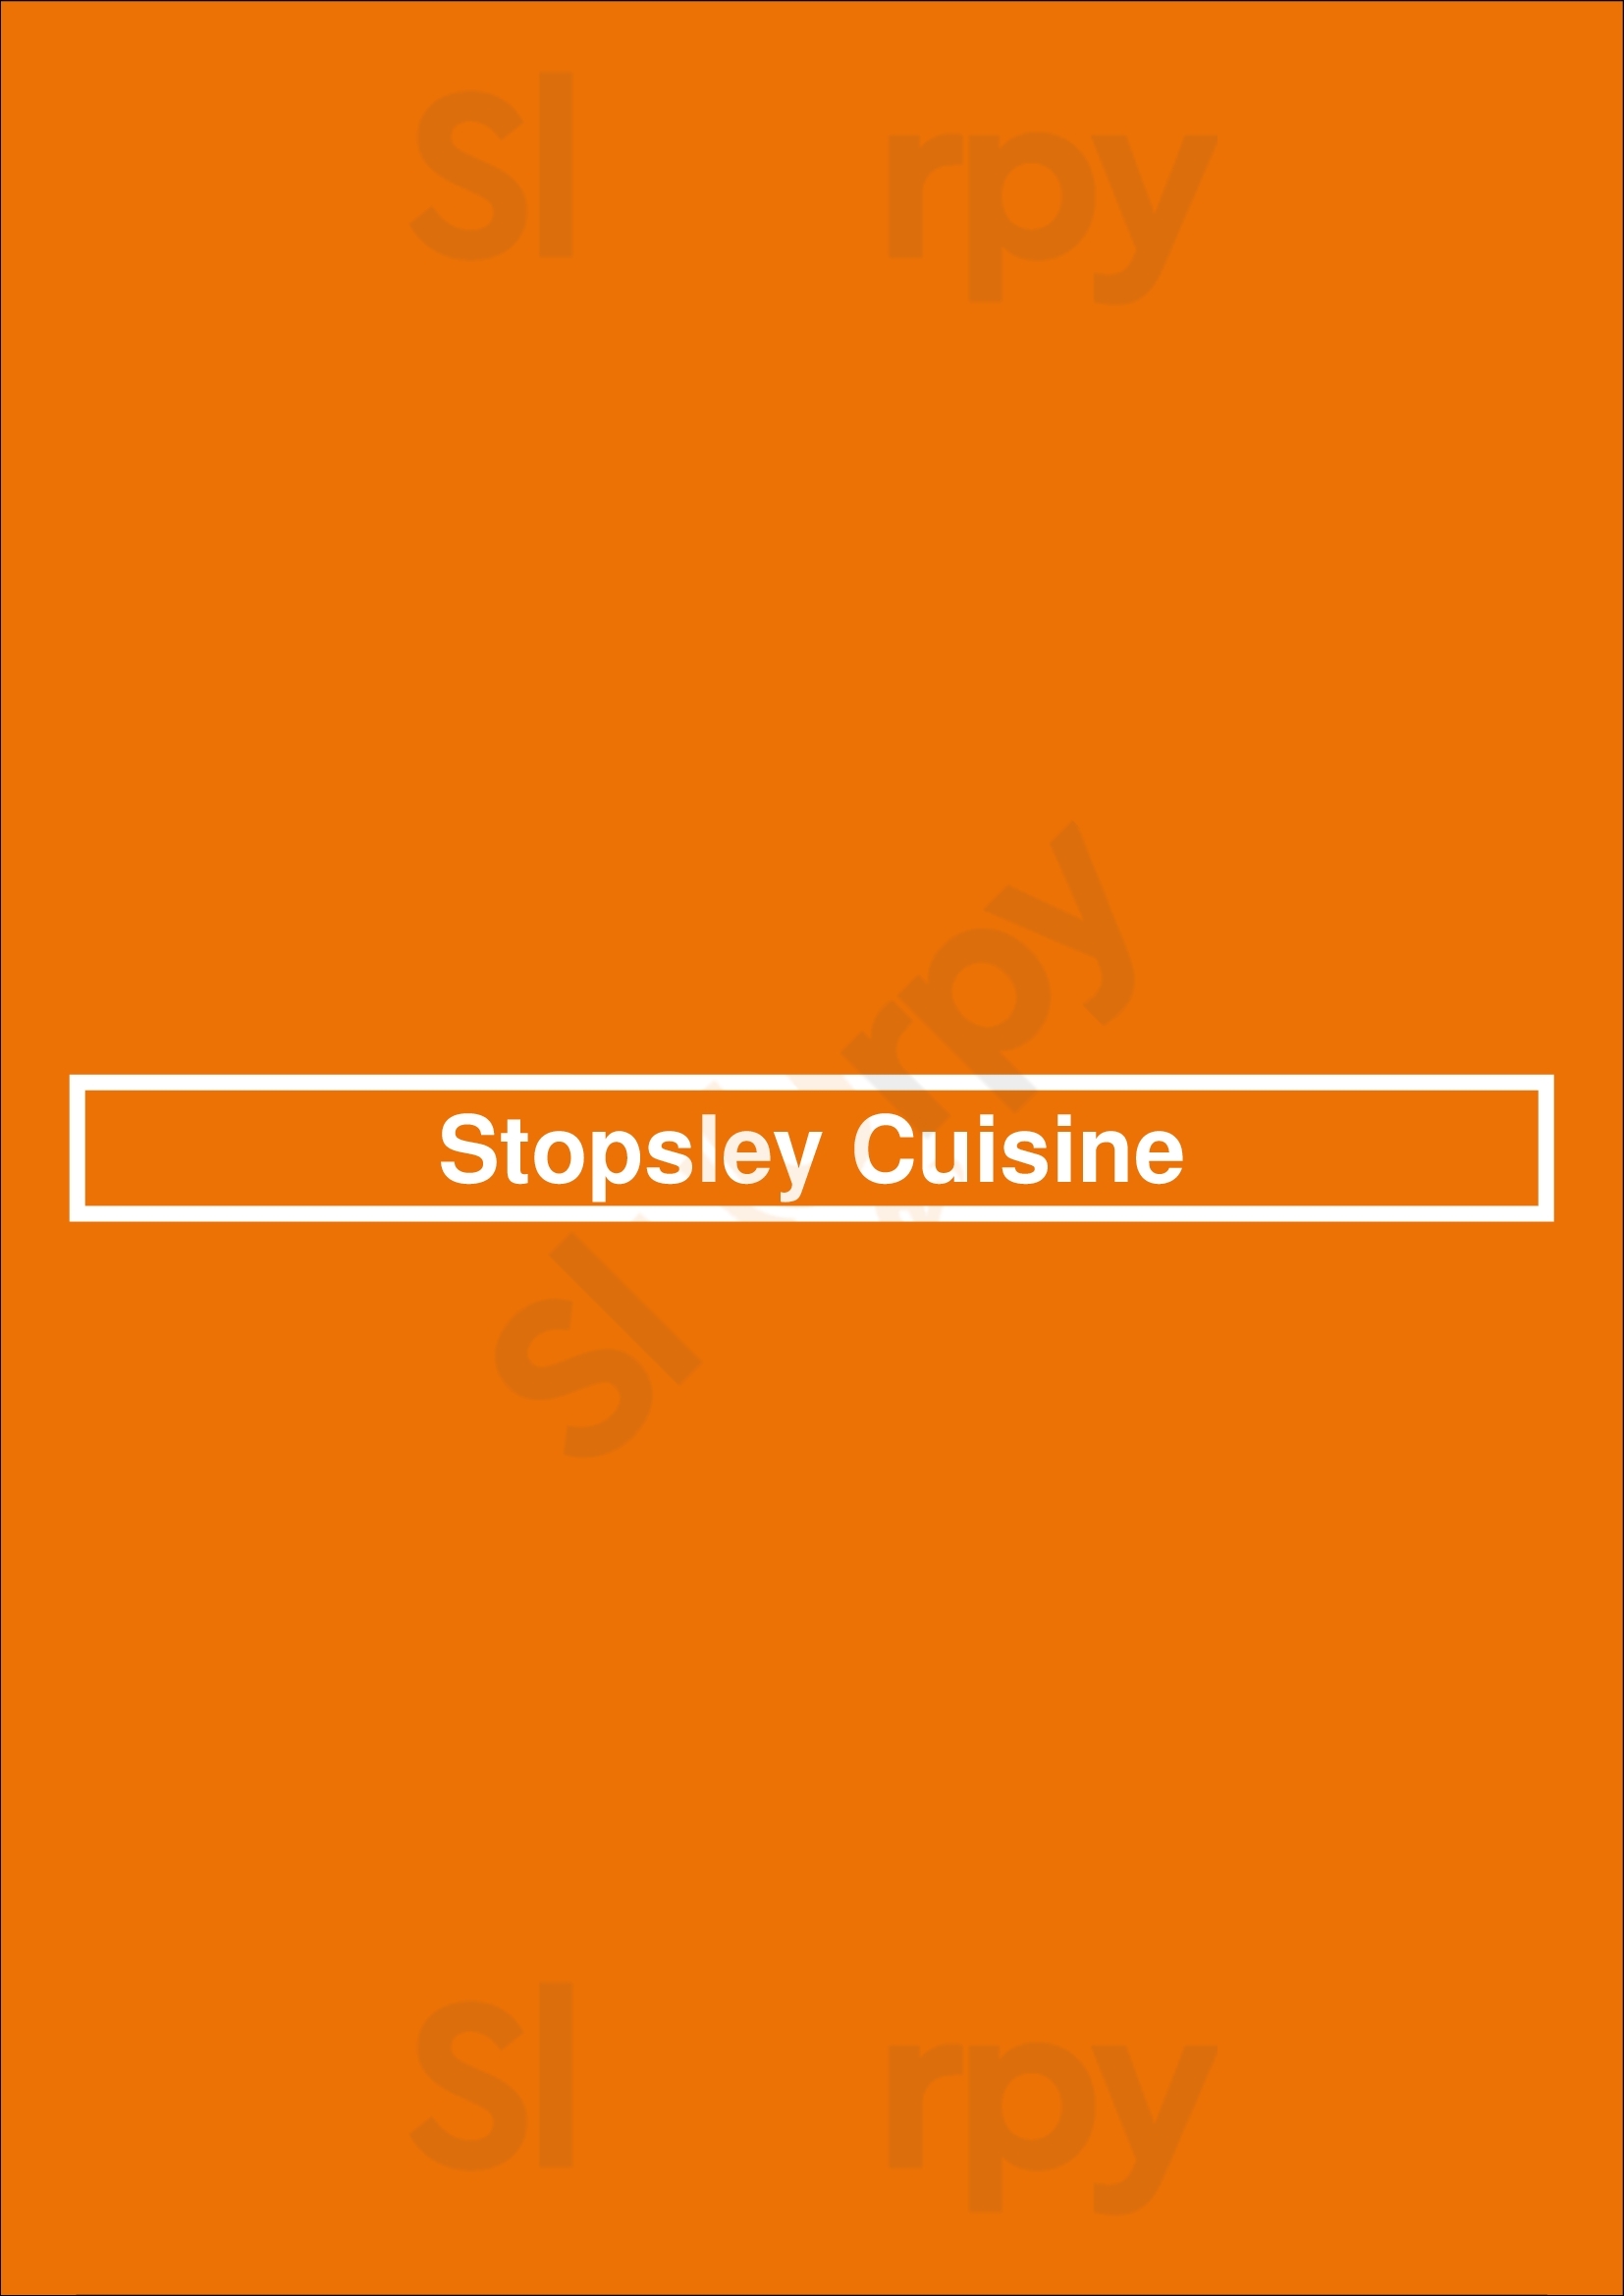 Stopsley Cuisine Luton Menu - 1